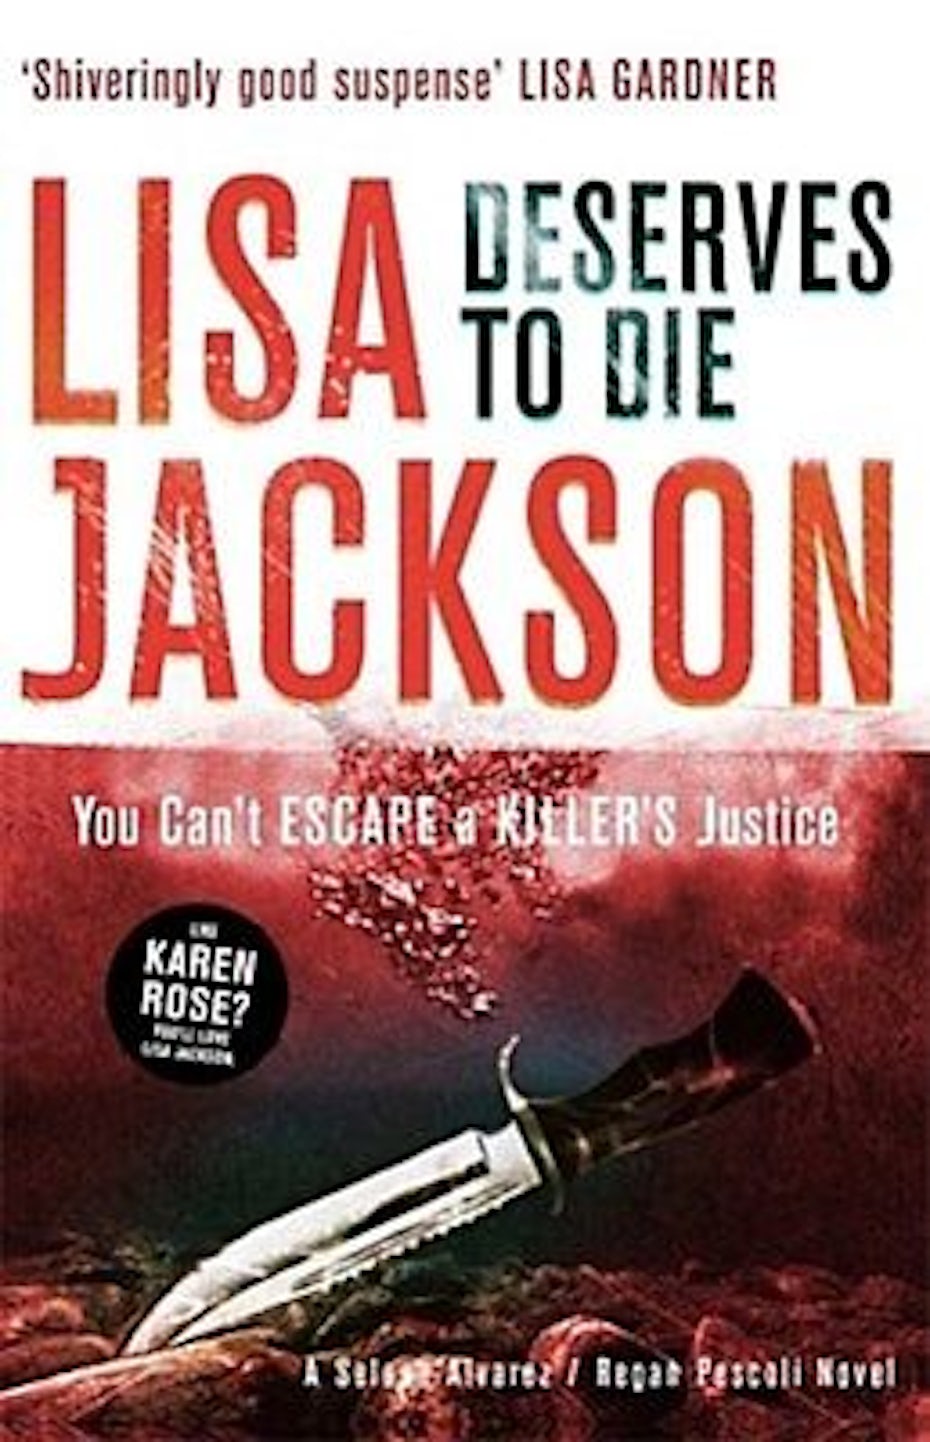 Updated Lisa Jackson Deserves to Die cover